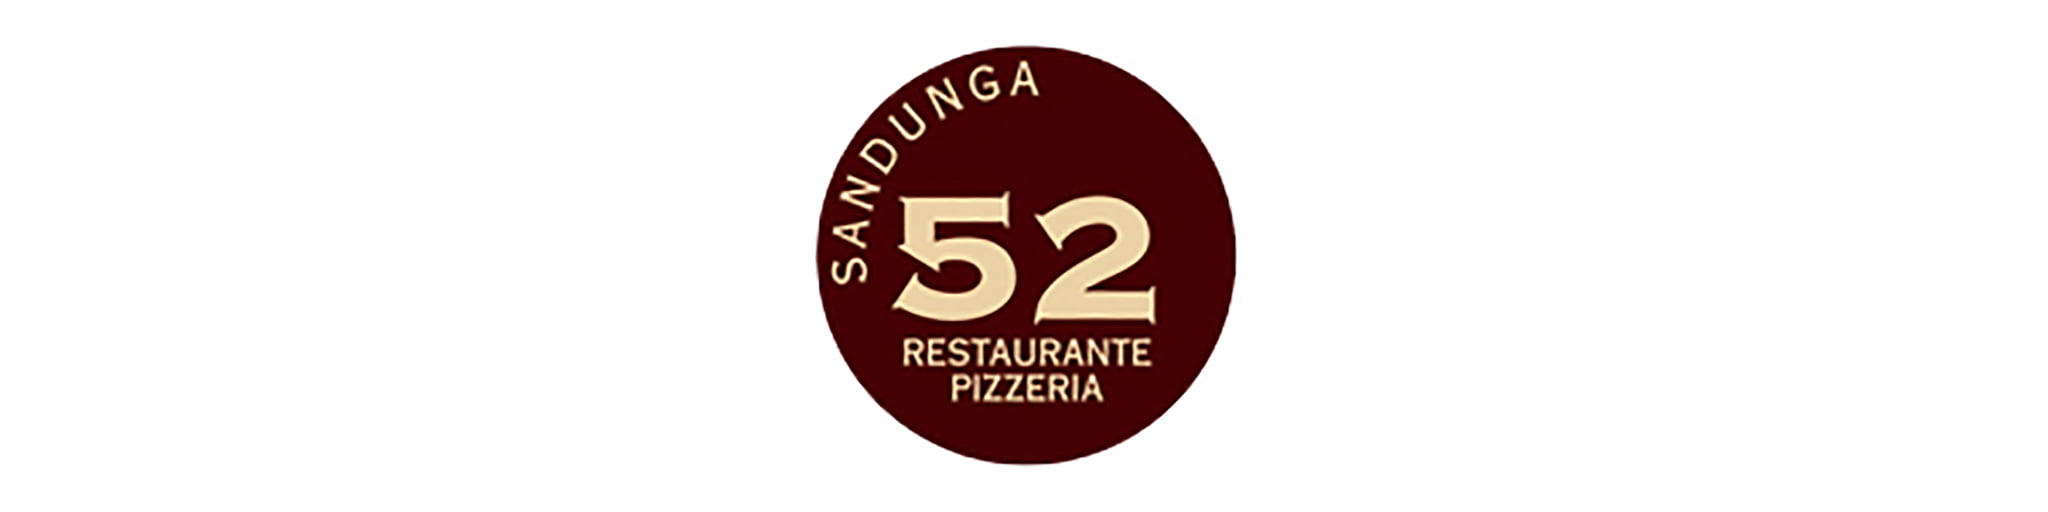 Logotipo Sandunga 52